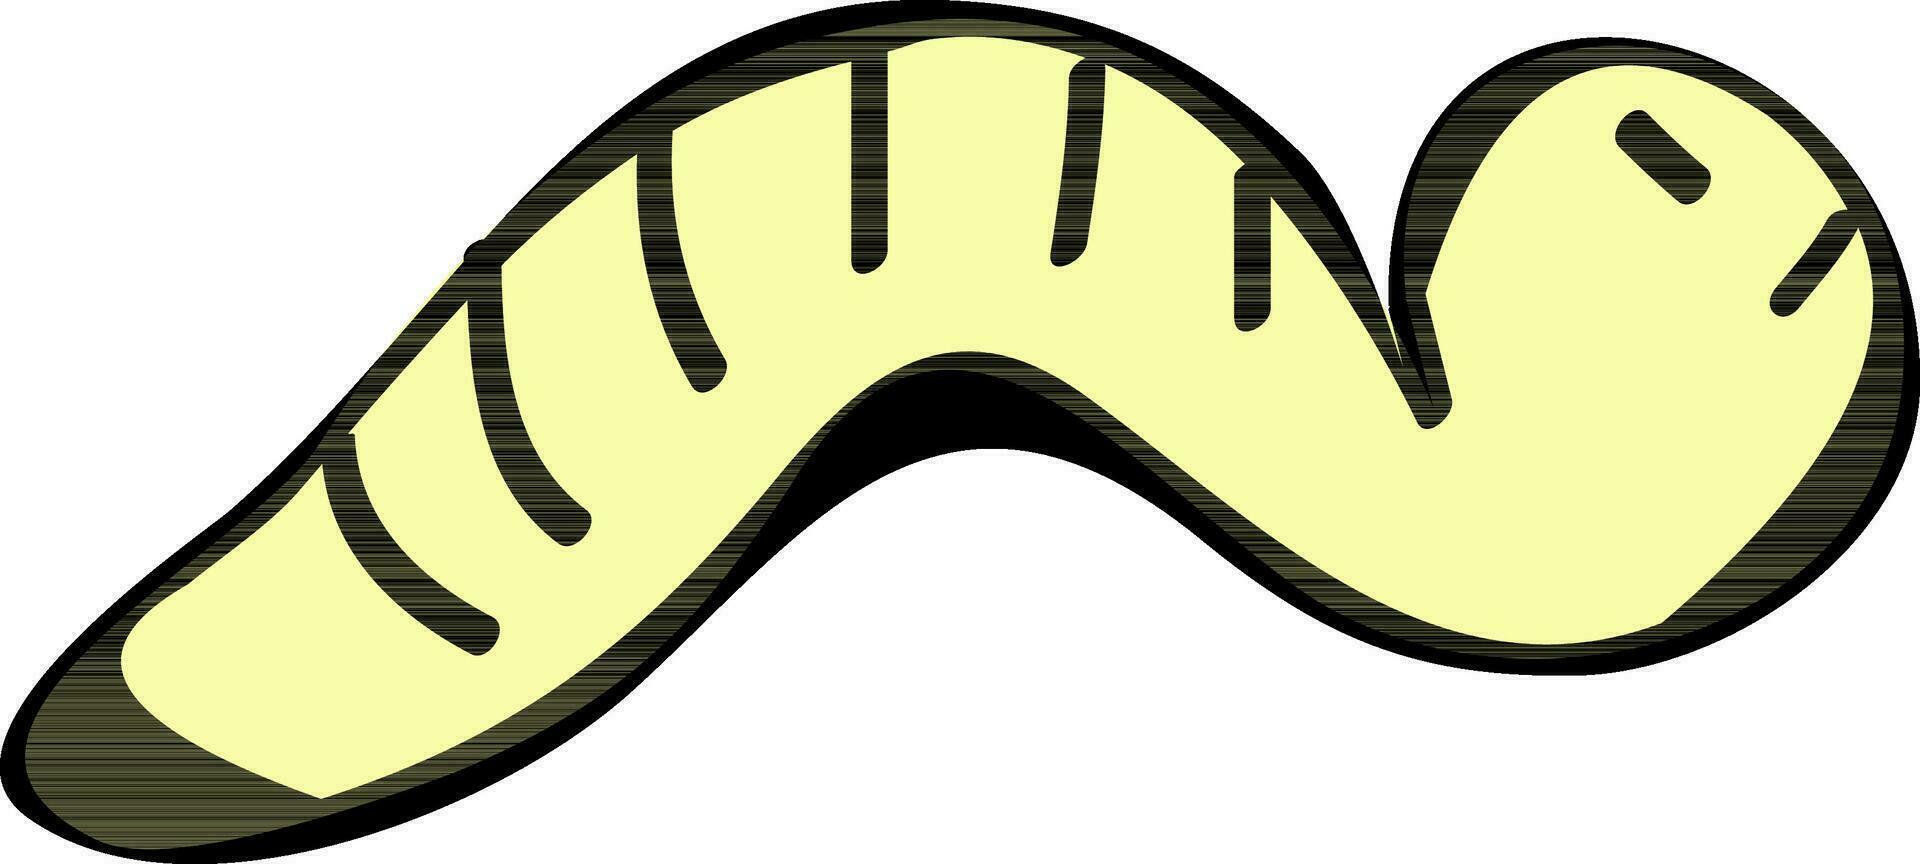 Doodle character of a caterpillar. vector